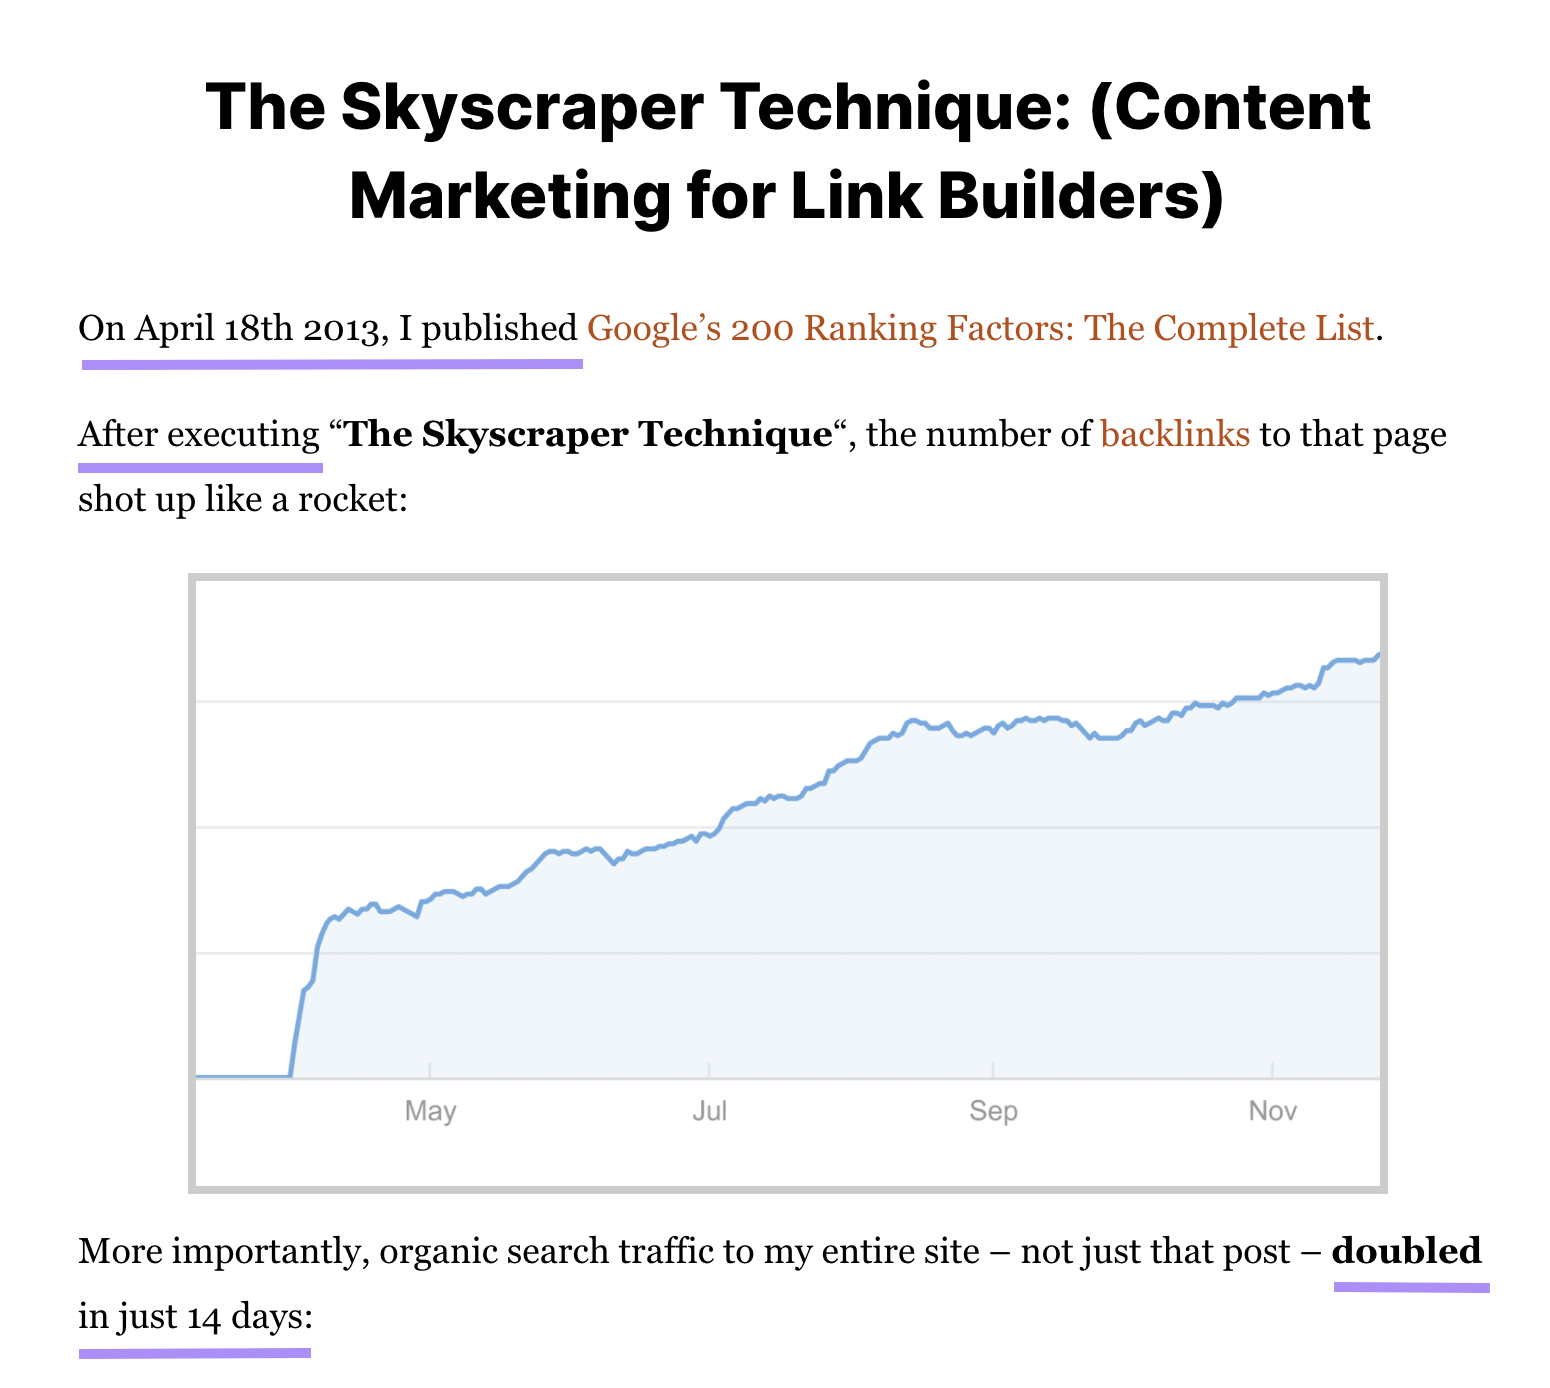 Backlinko's "The Skyscraper Technique: (Content Marketing for Link Builders)" article